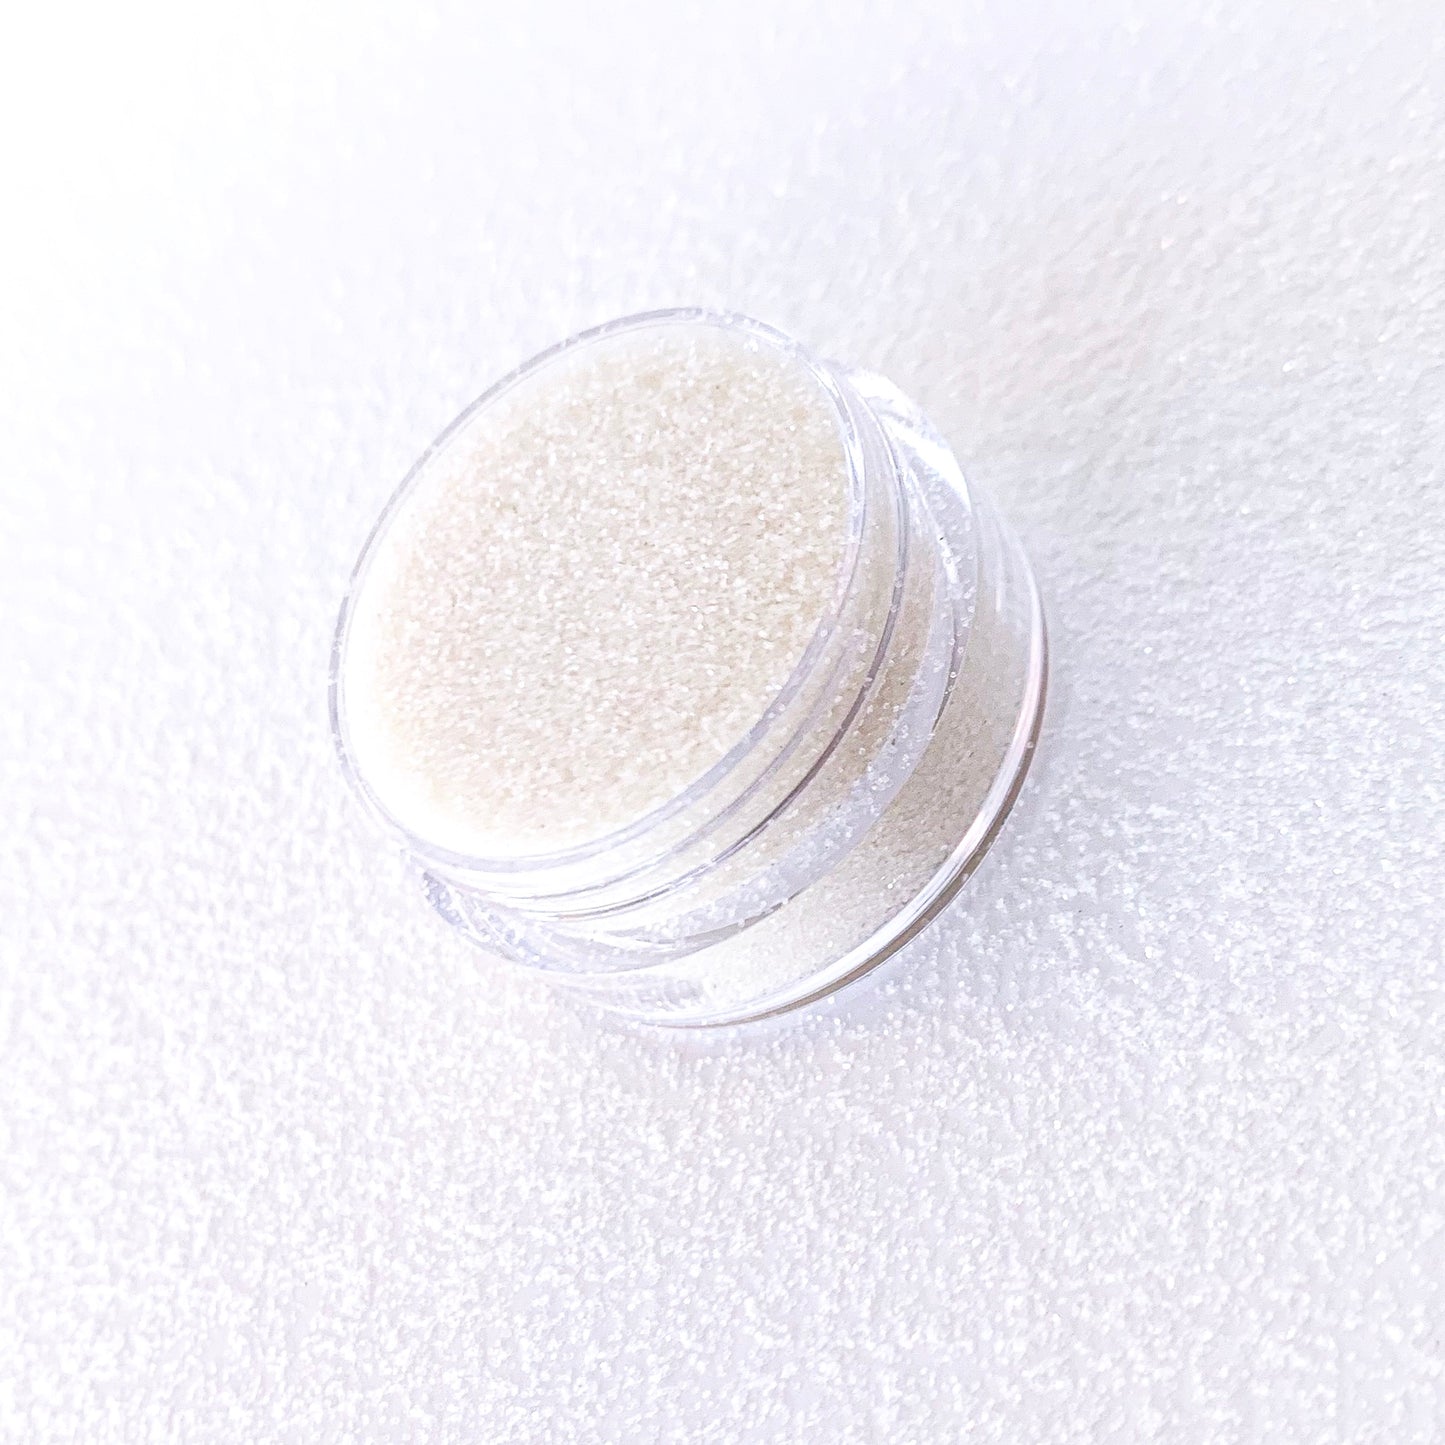 White Ultrafine Biodegradable Glitter